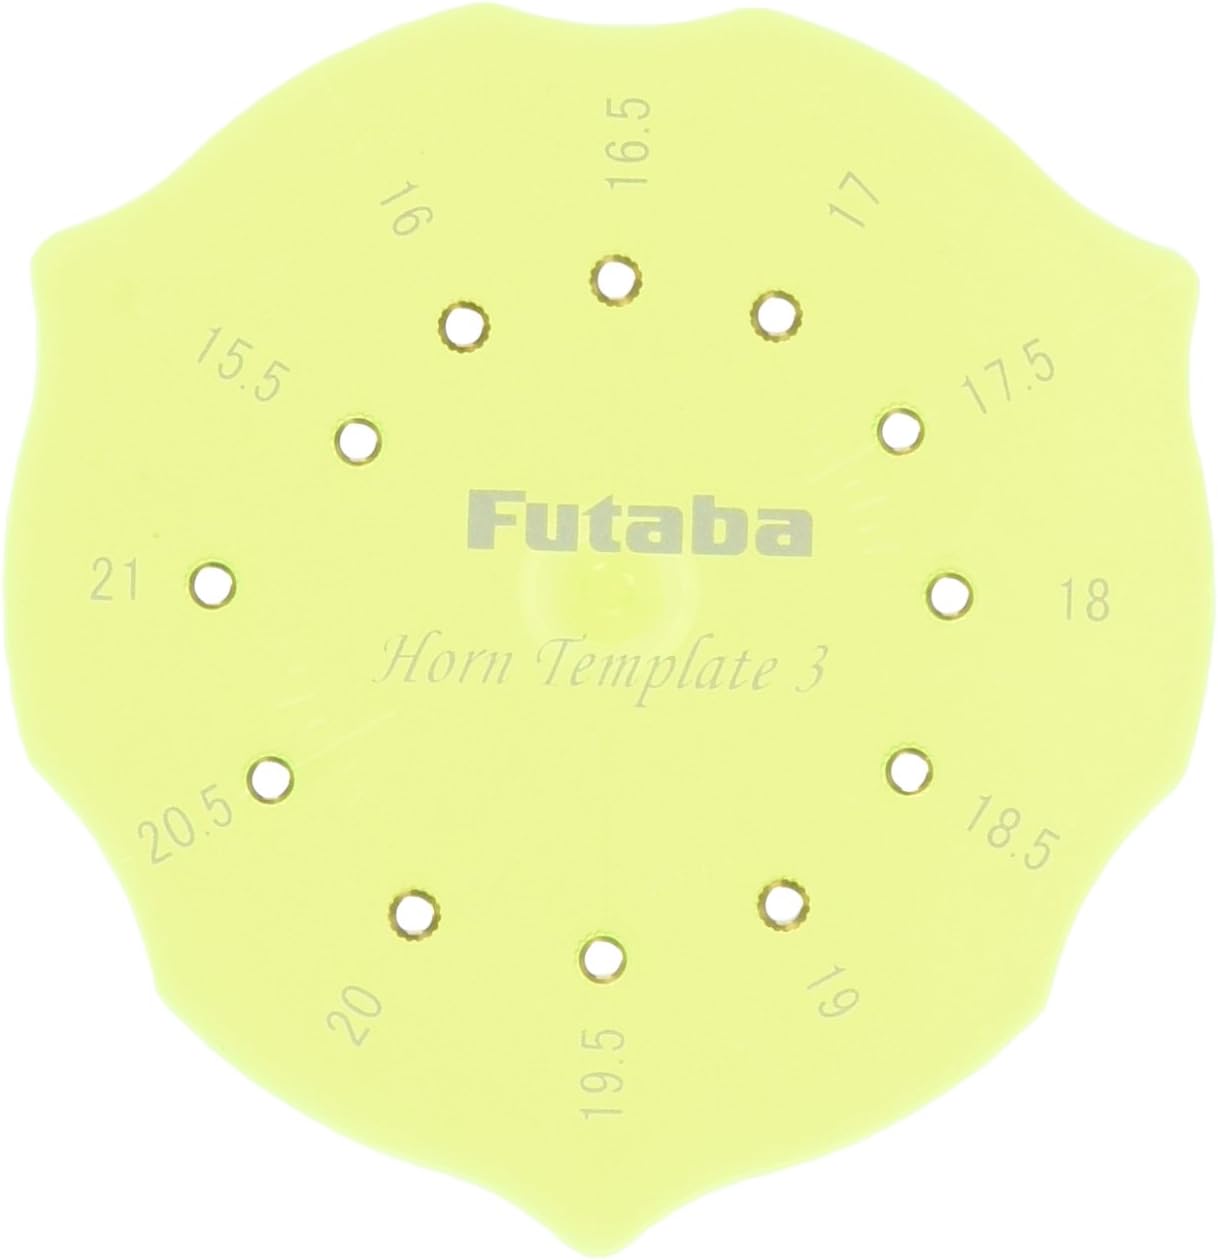 Futaba BS0162 horn template 3 (15.5-21) - BanzaiHobby